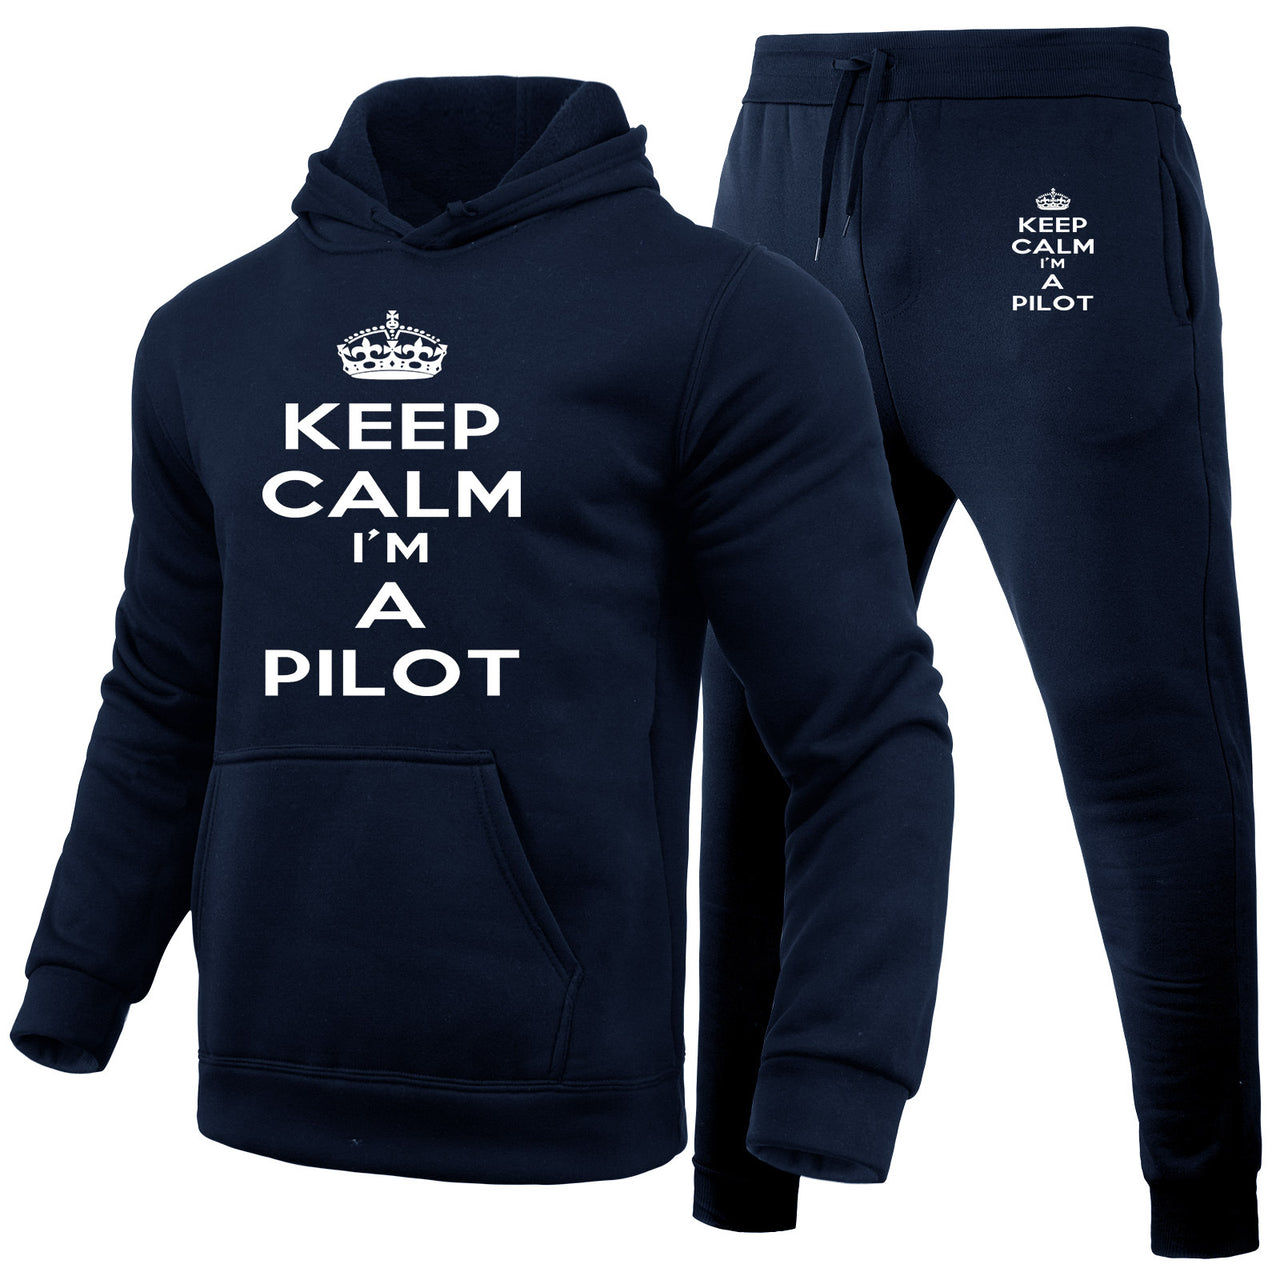 Keep Calm I'm a Pilot Designed Hoodies & Sweatpants Set